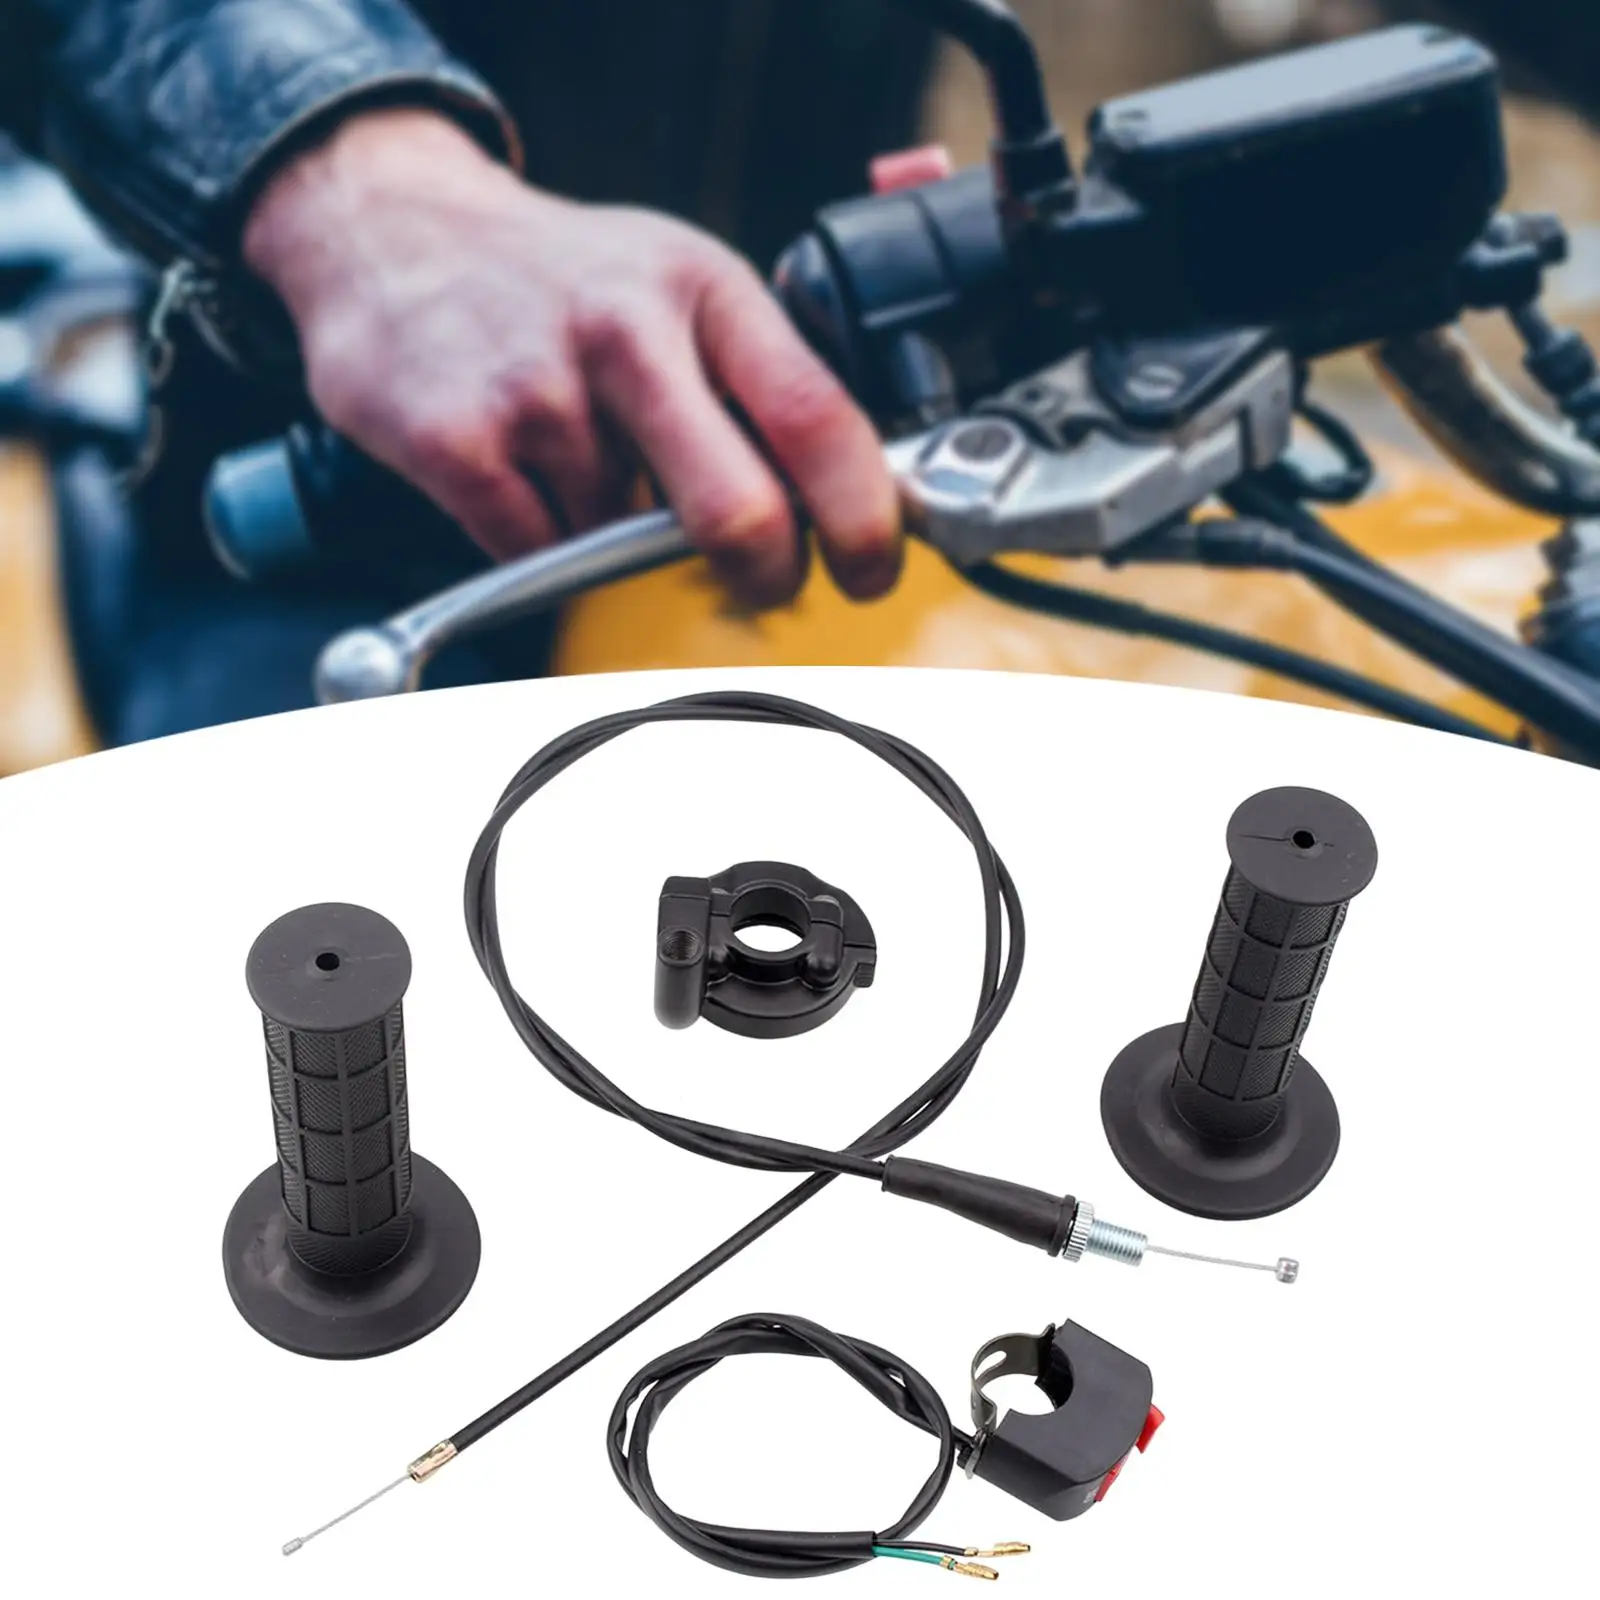 Throttle Accelerator Handle Grips Cable Set for 50cc Mini Bike ATV